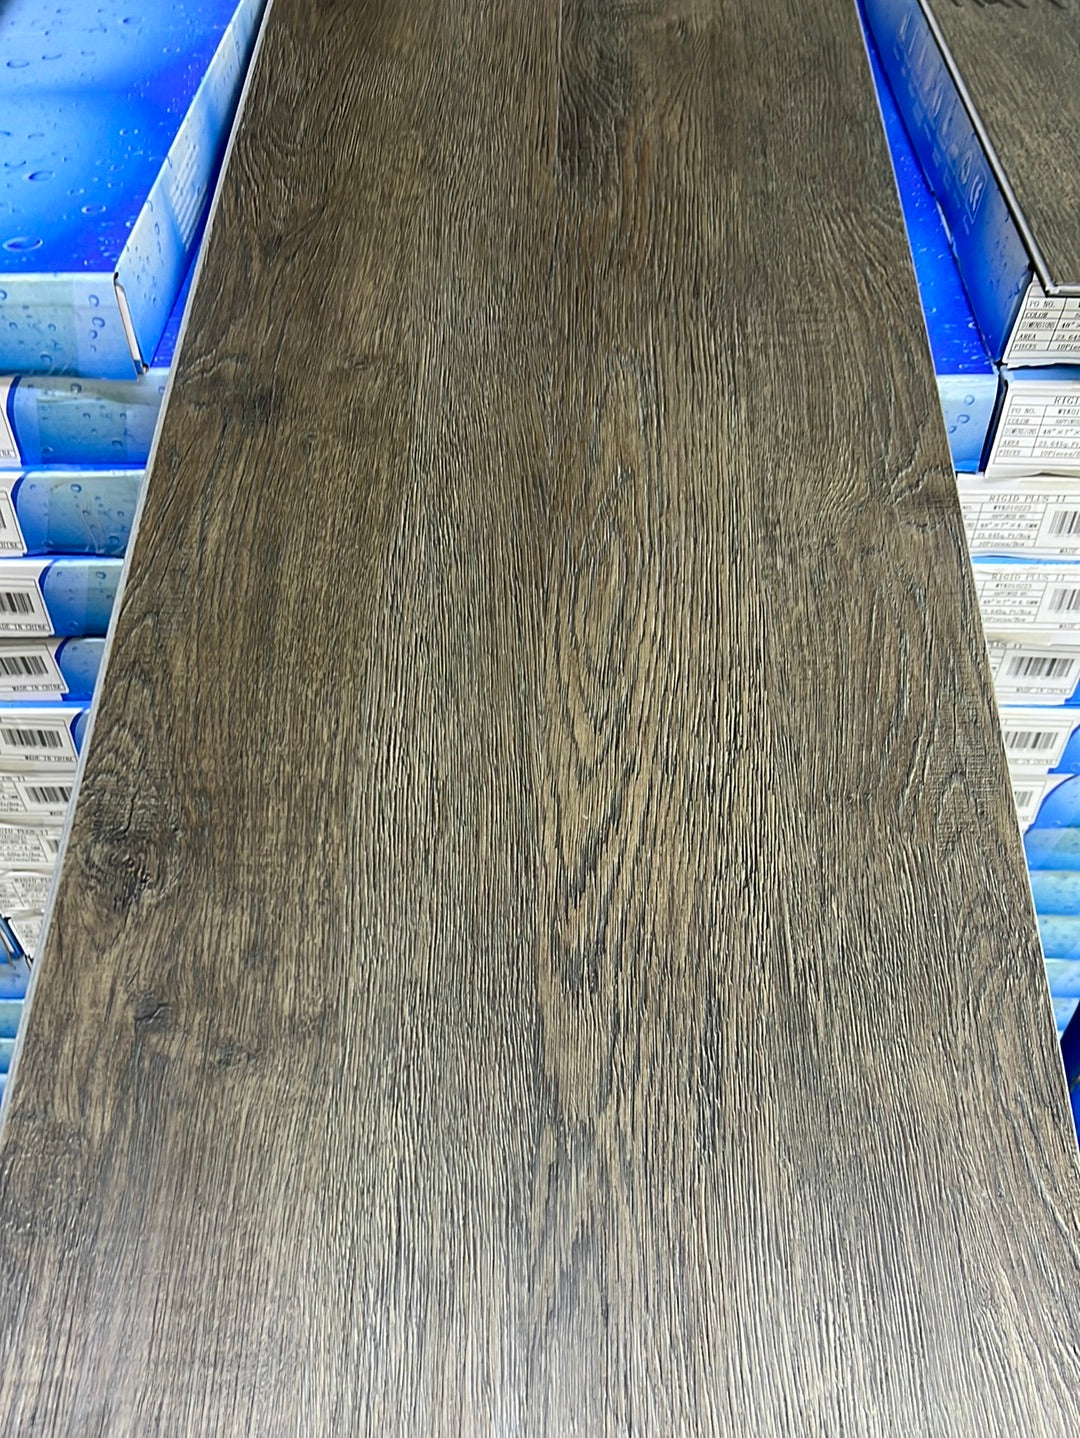 Planks of wood grain vinyl